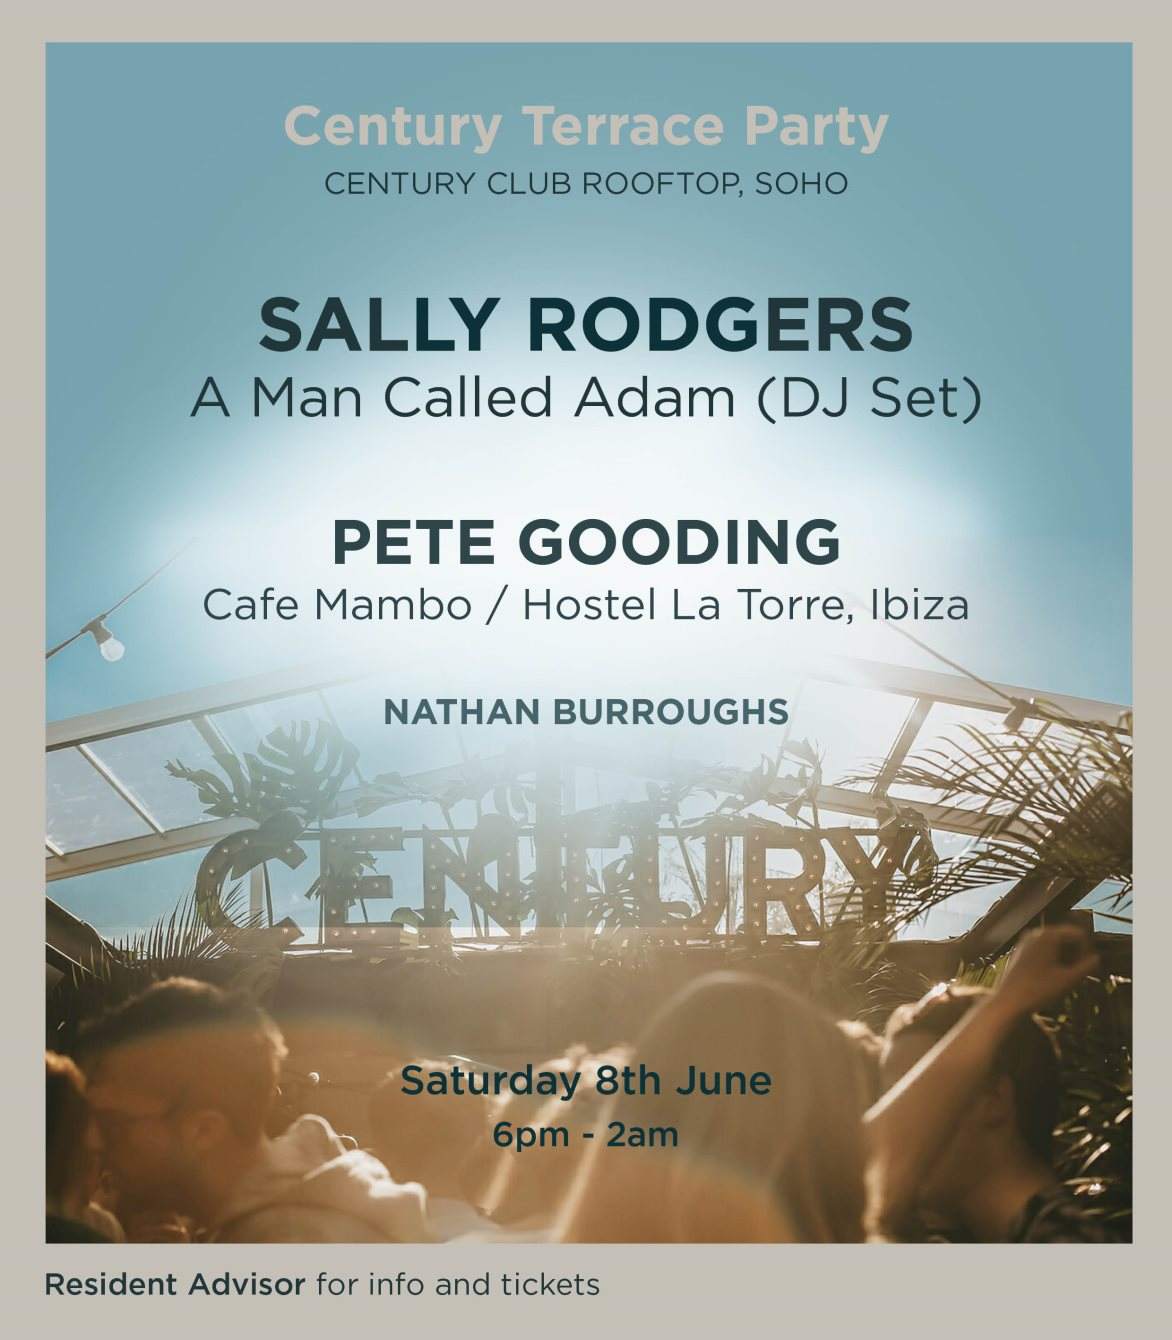 Century Terrace Party - フライヤー表